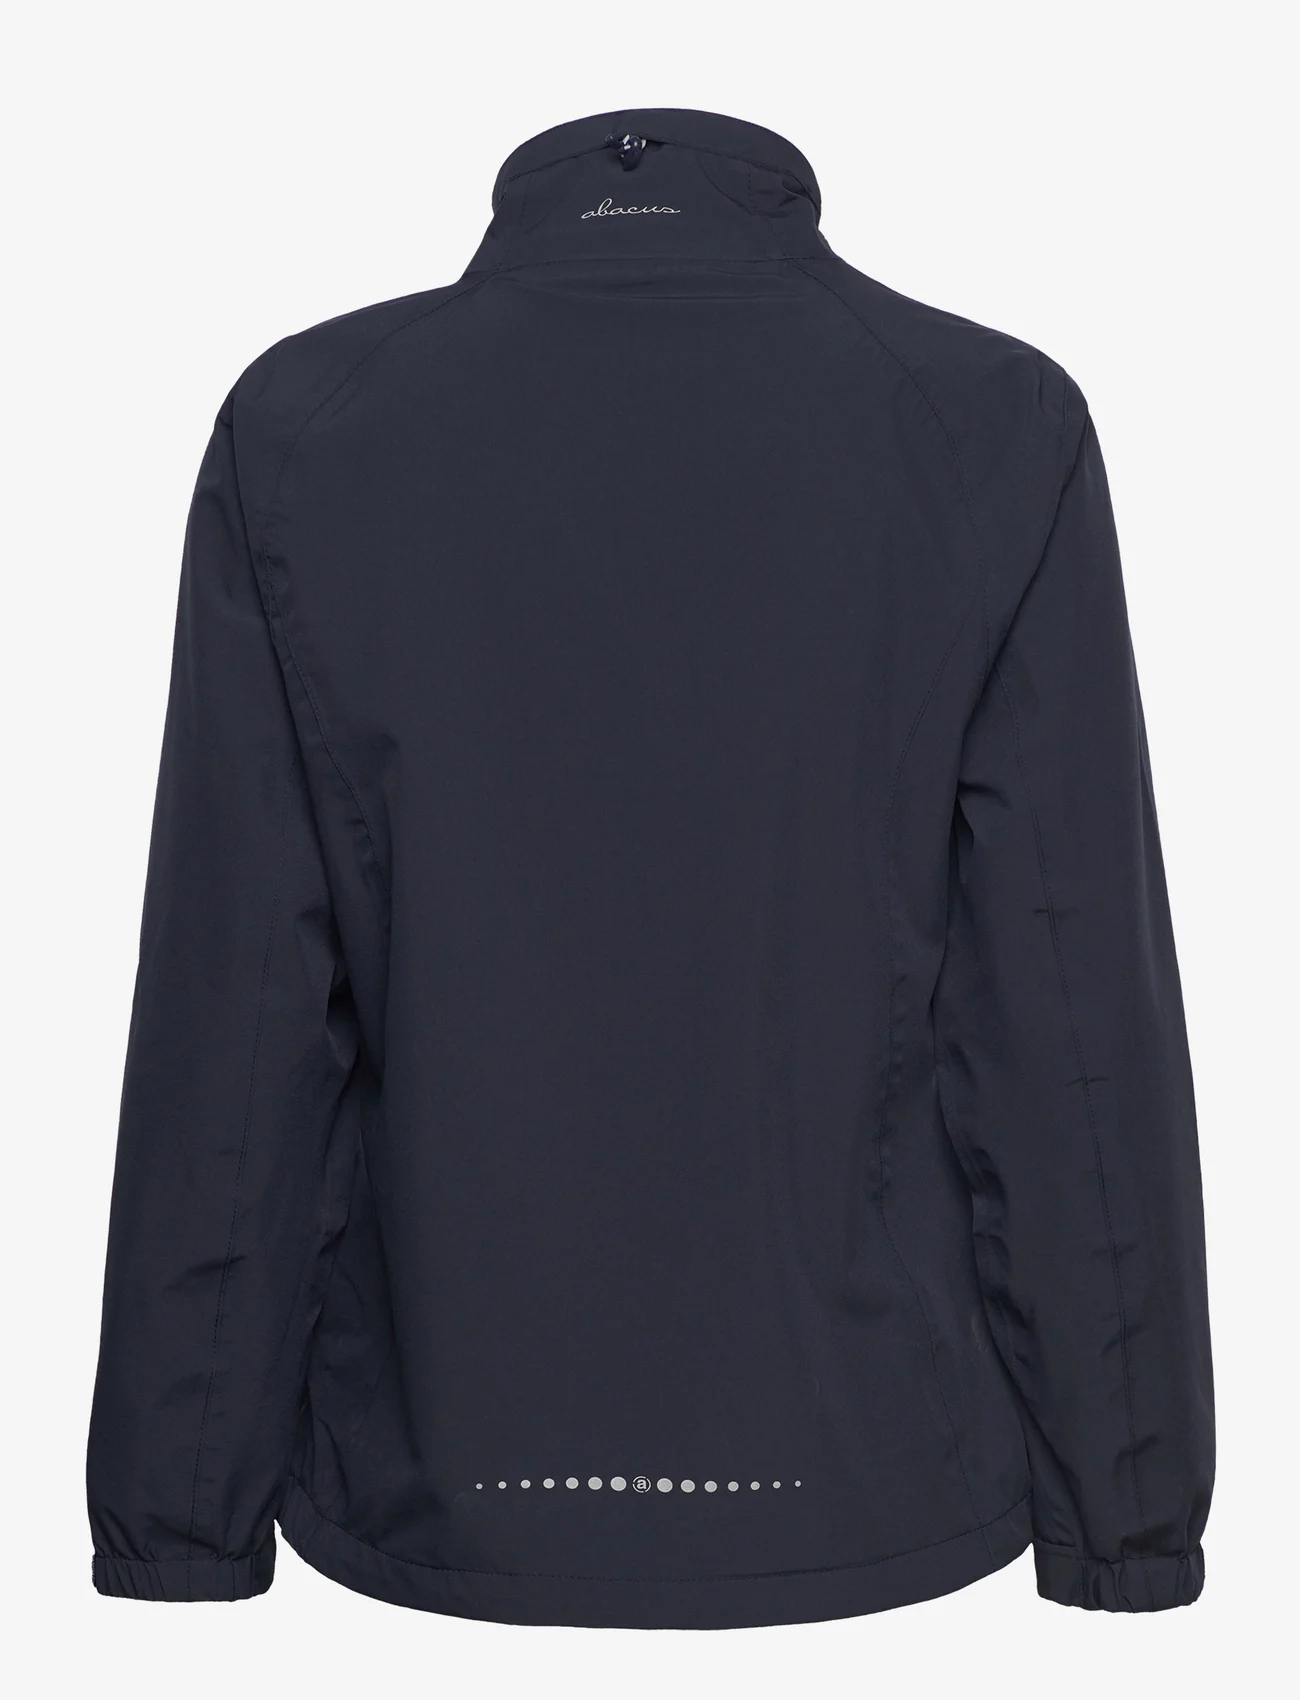 Abacus - Lds Links stretch rainjacket - golf jackets - navy - 1